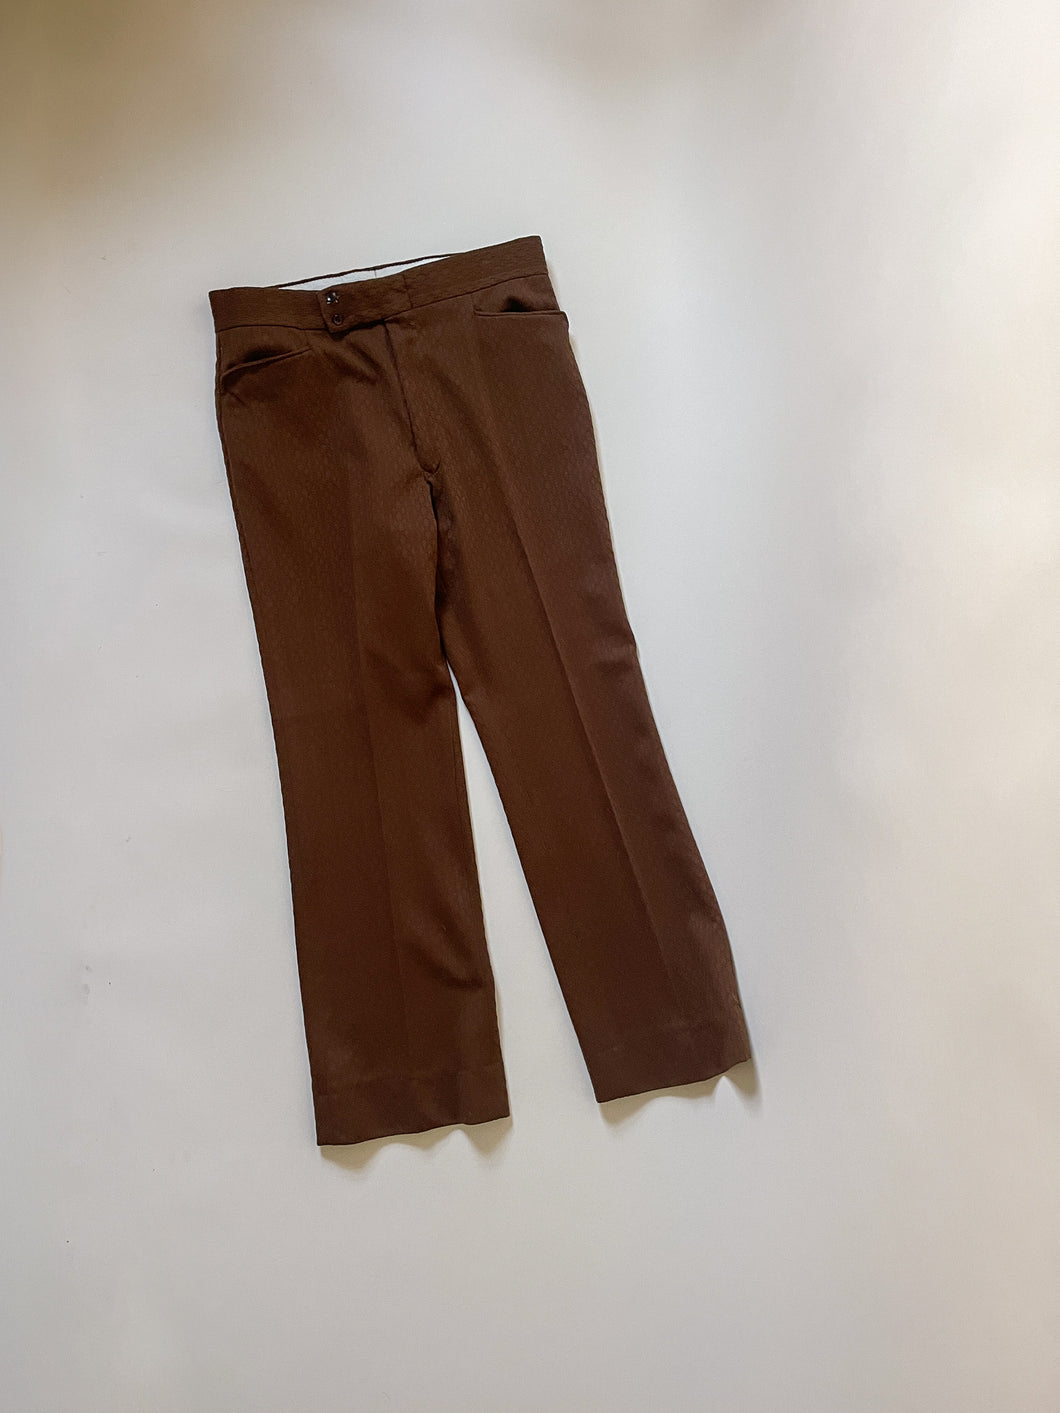 70s Poly Brown Leisure Pants | XL-2X